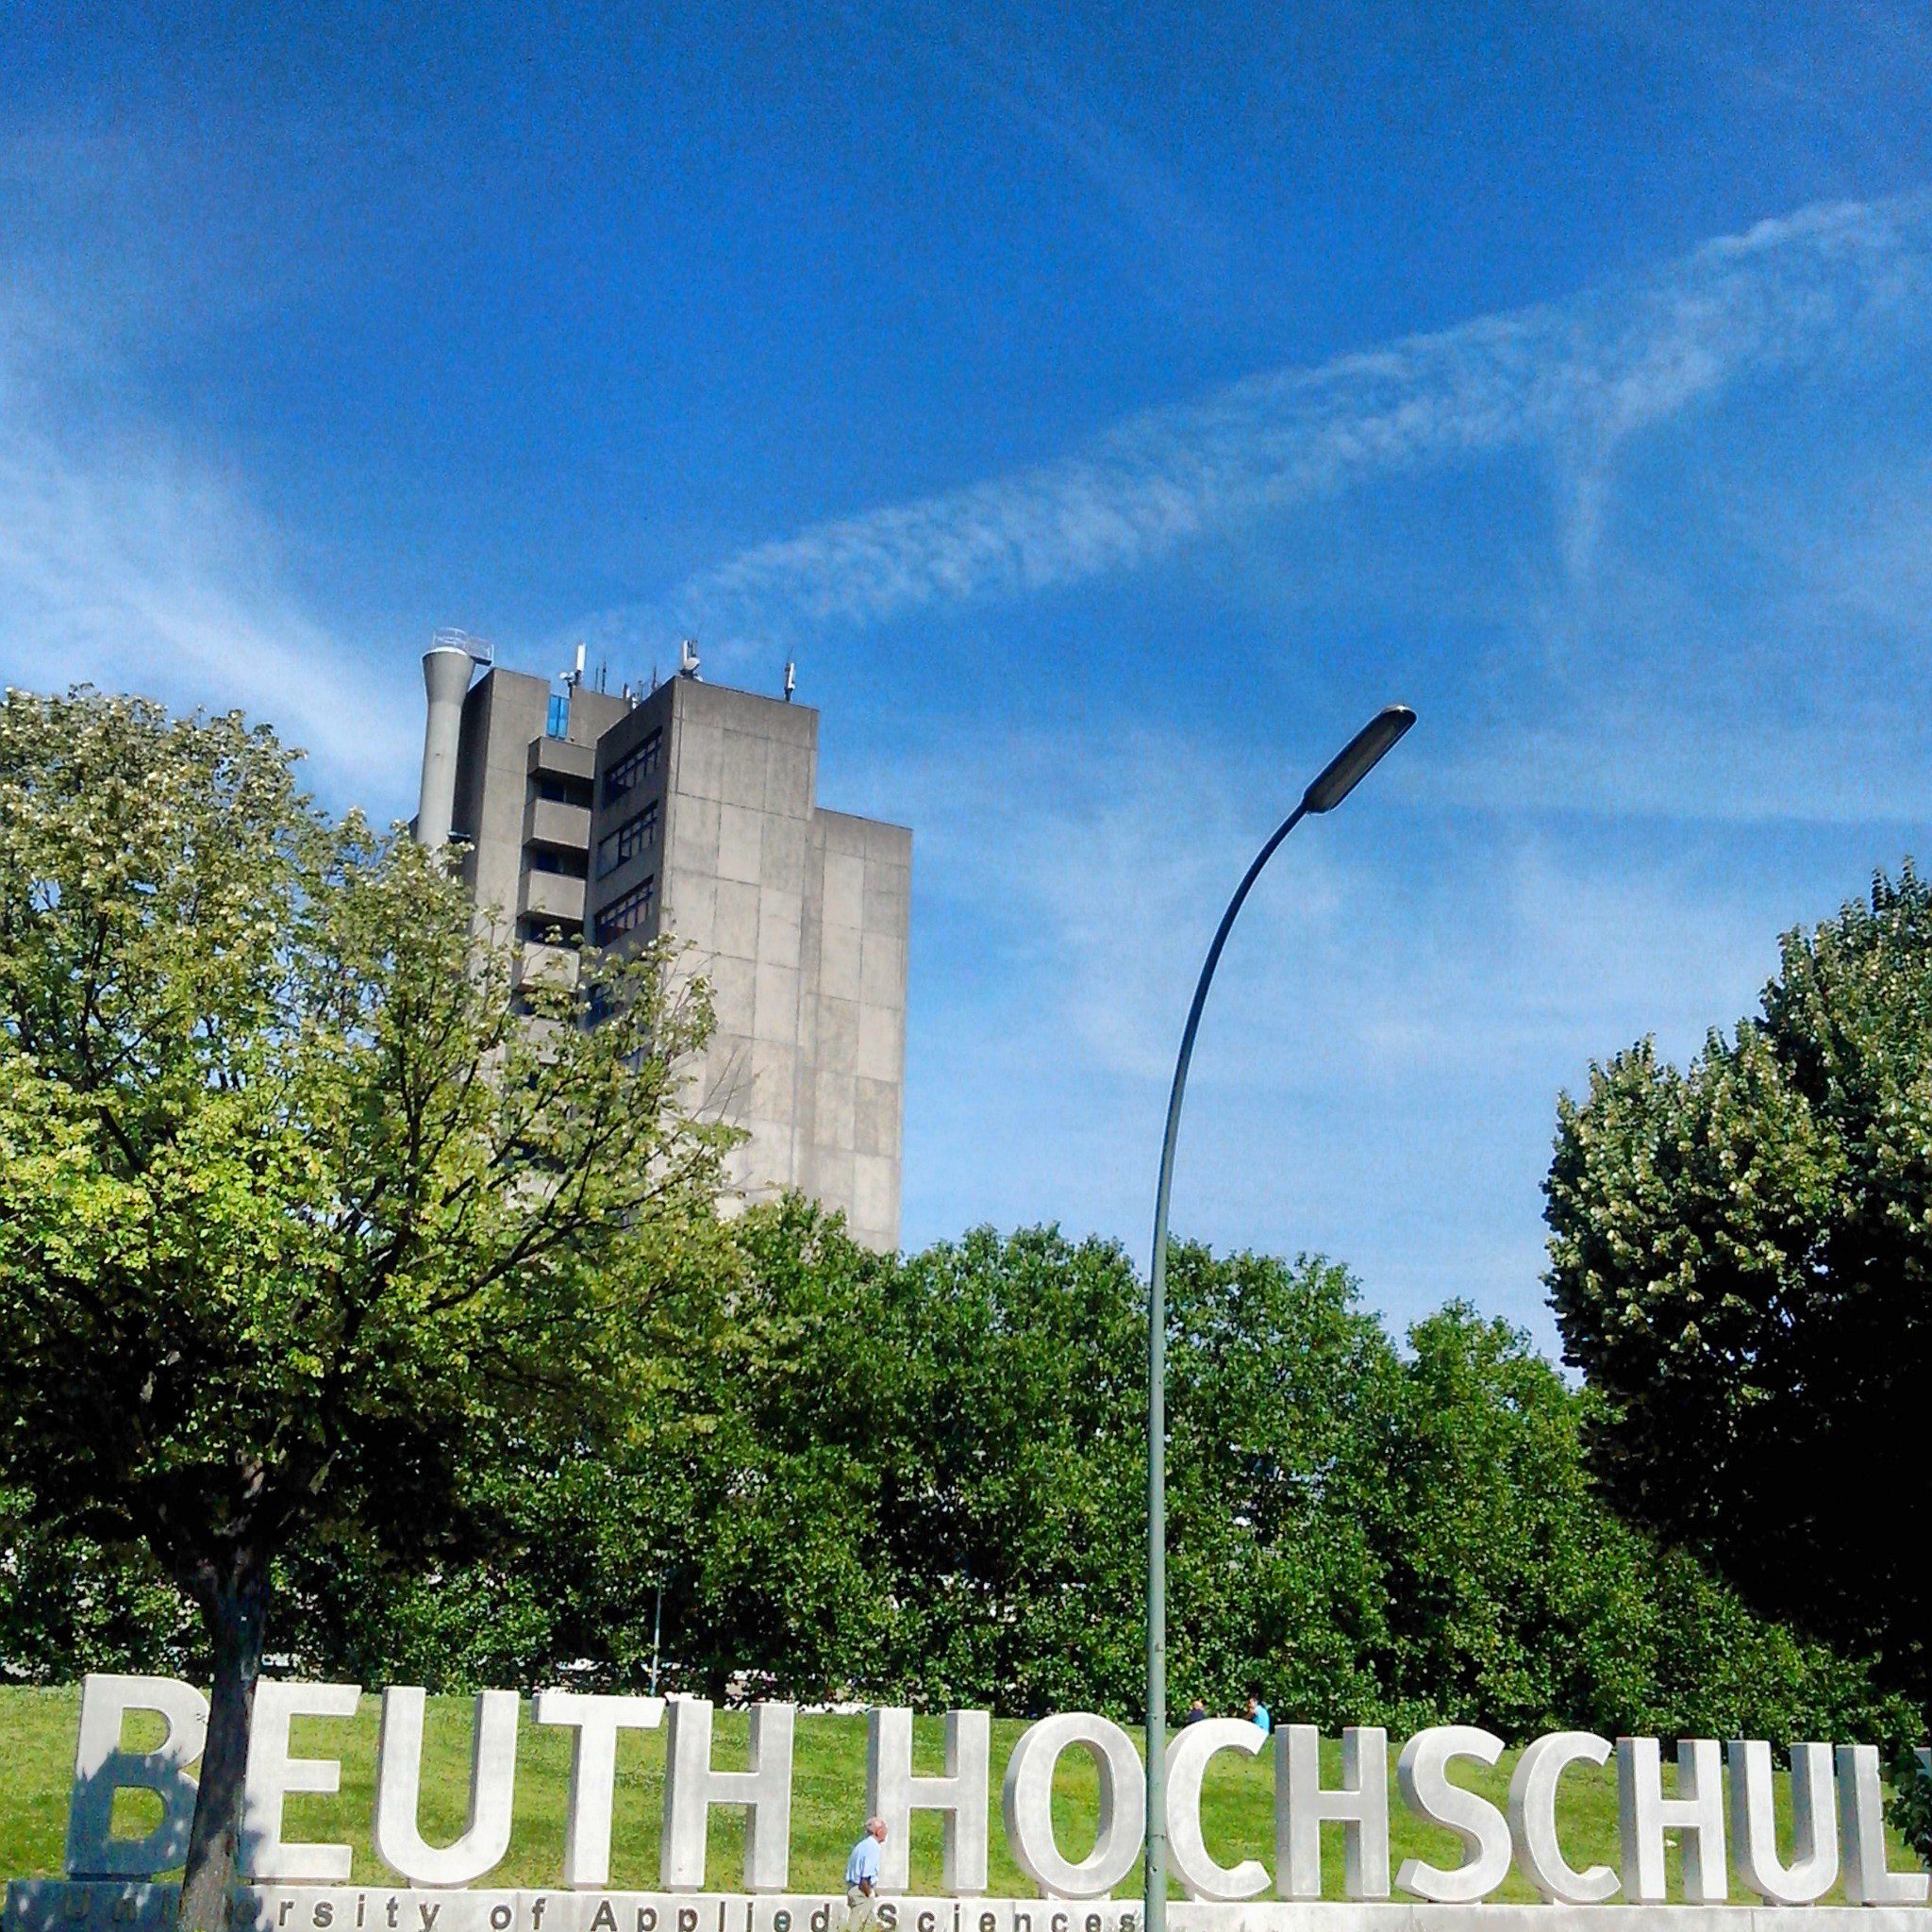 Beuth Hochschule